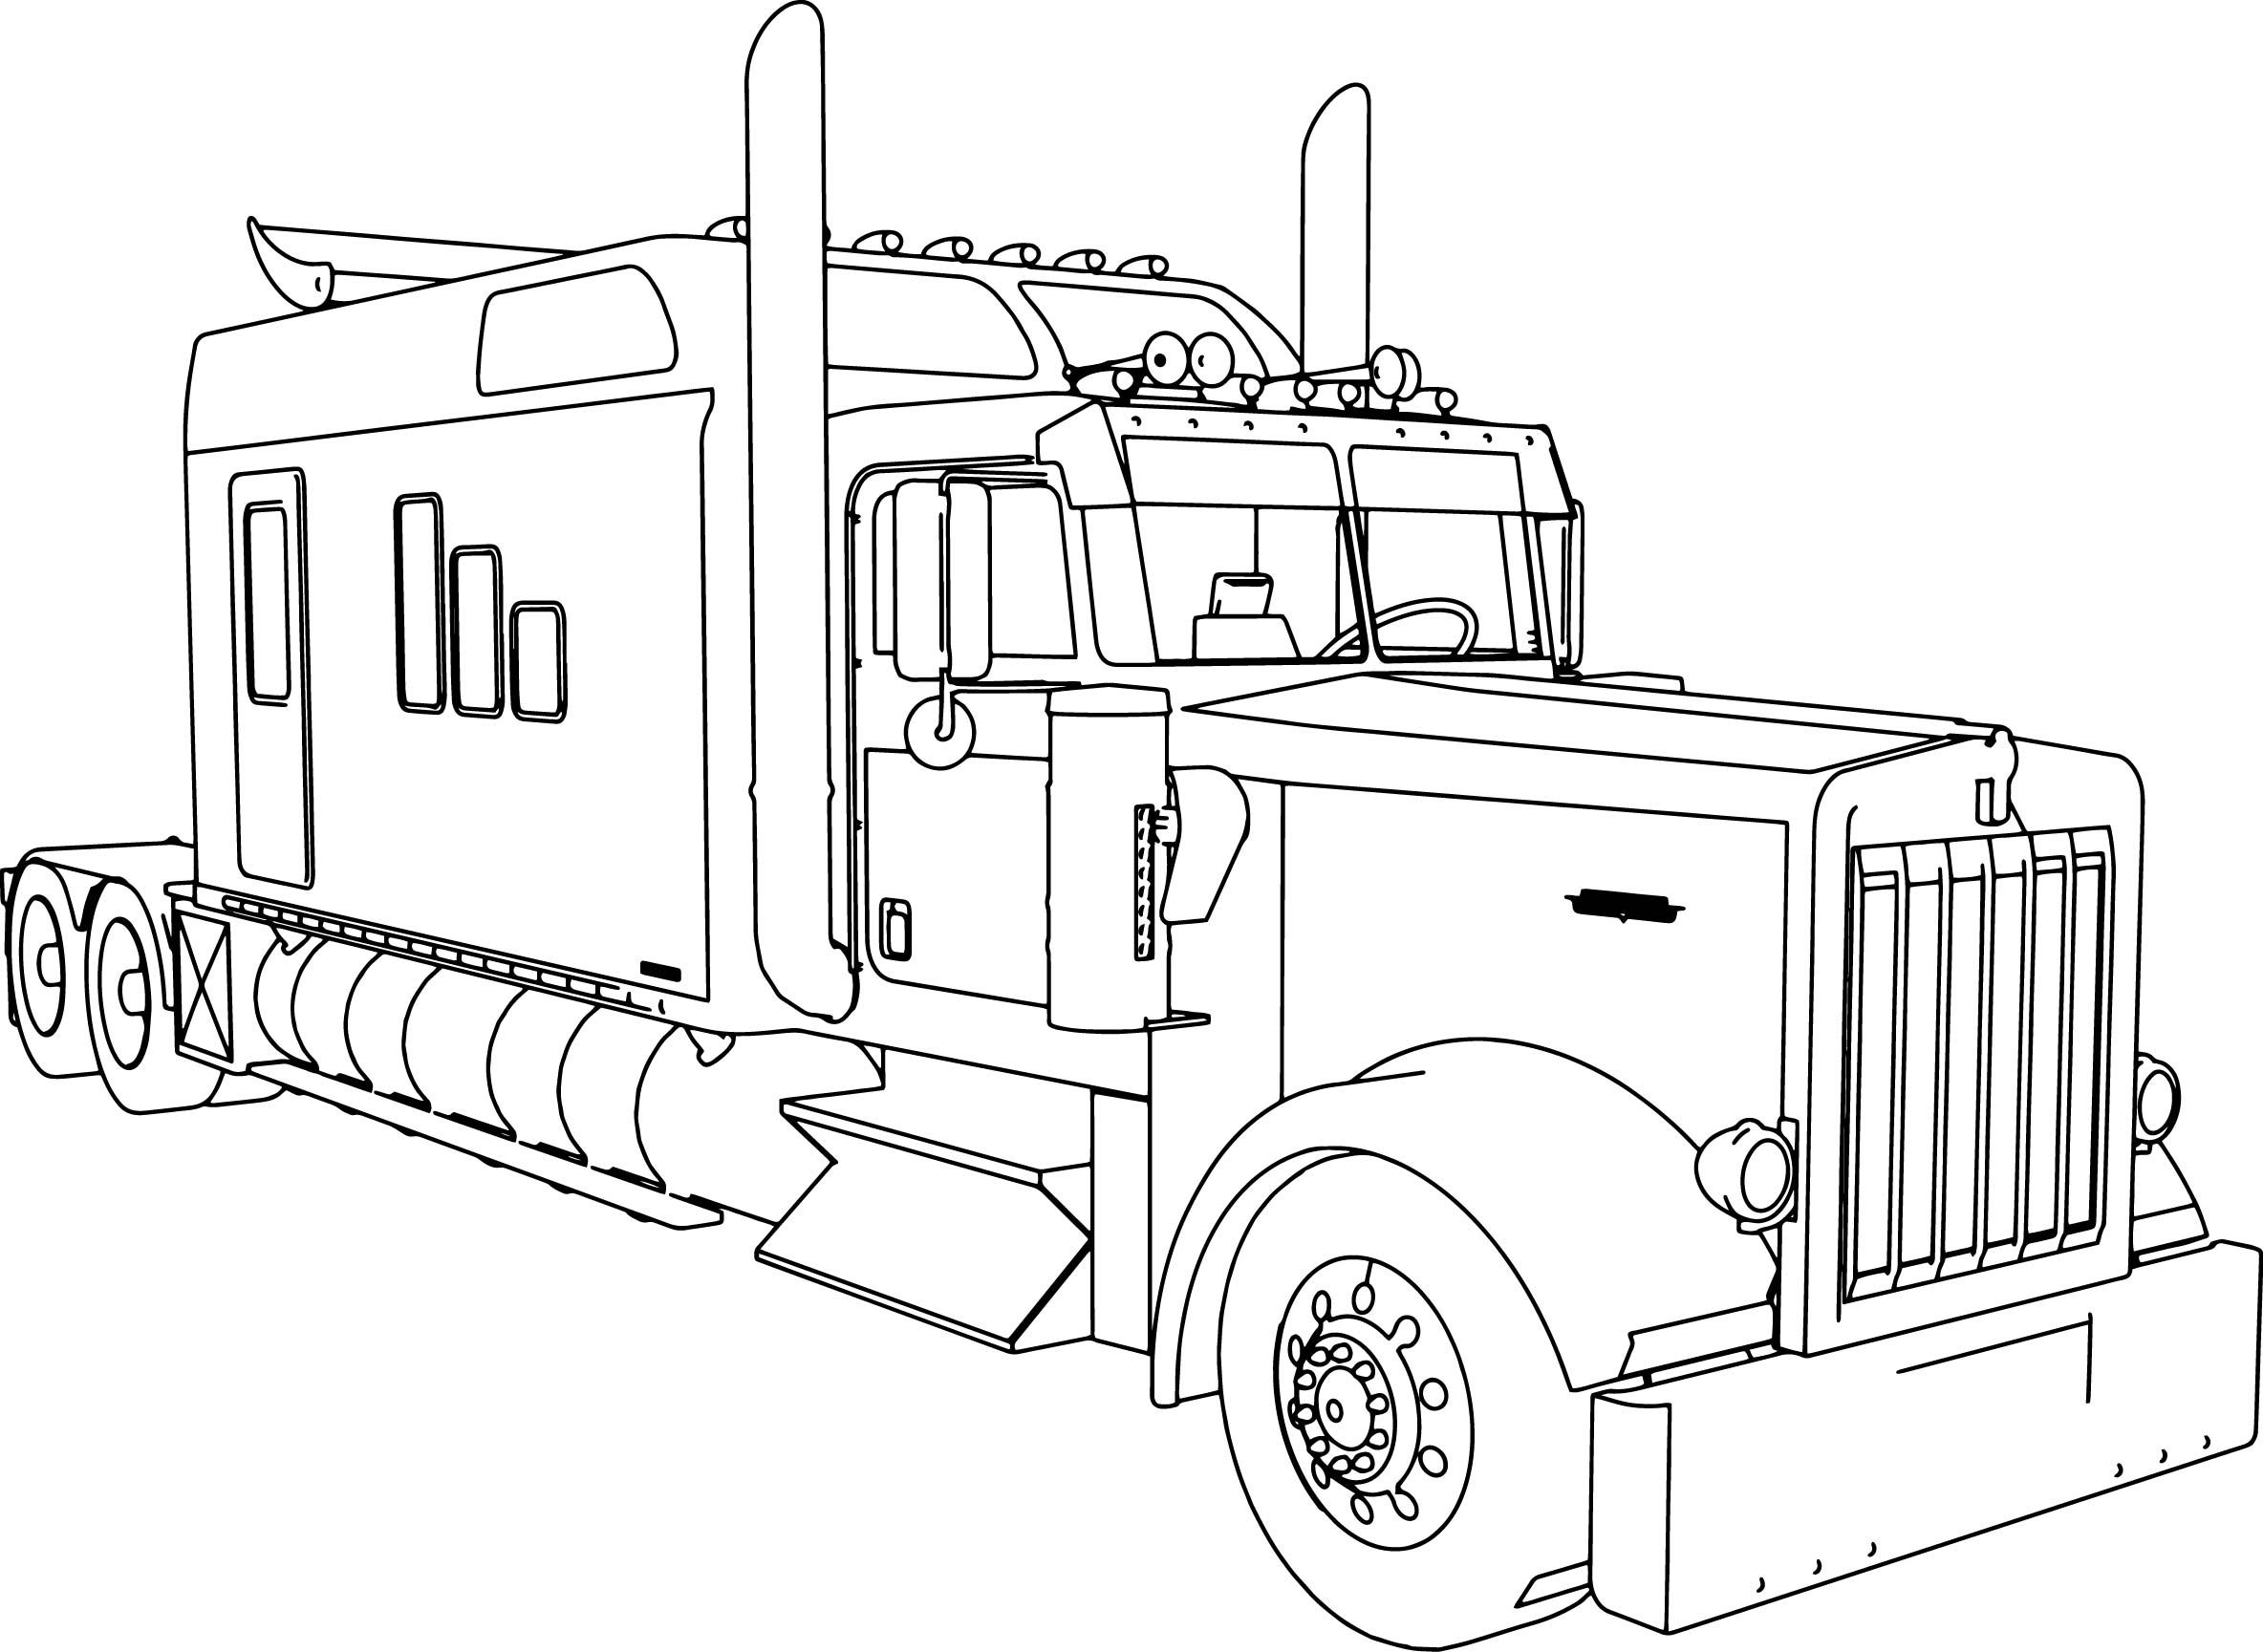 Peterbilt semi truck coloring page drawing sketch sketch coloring page truck coloring pages monster truck coloring pages tractor coloring pages